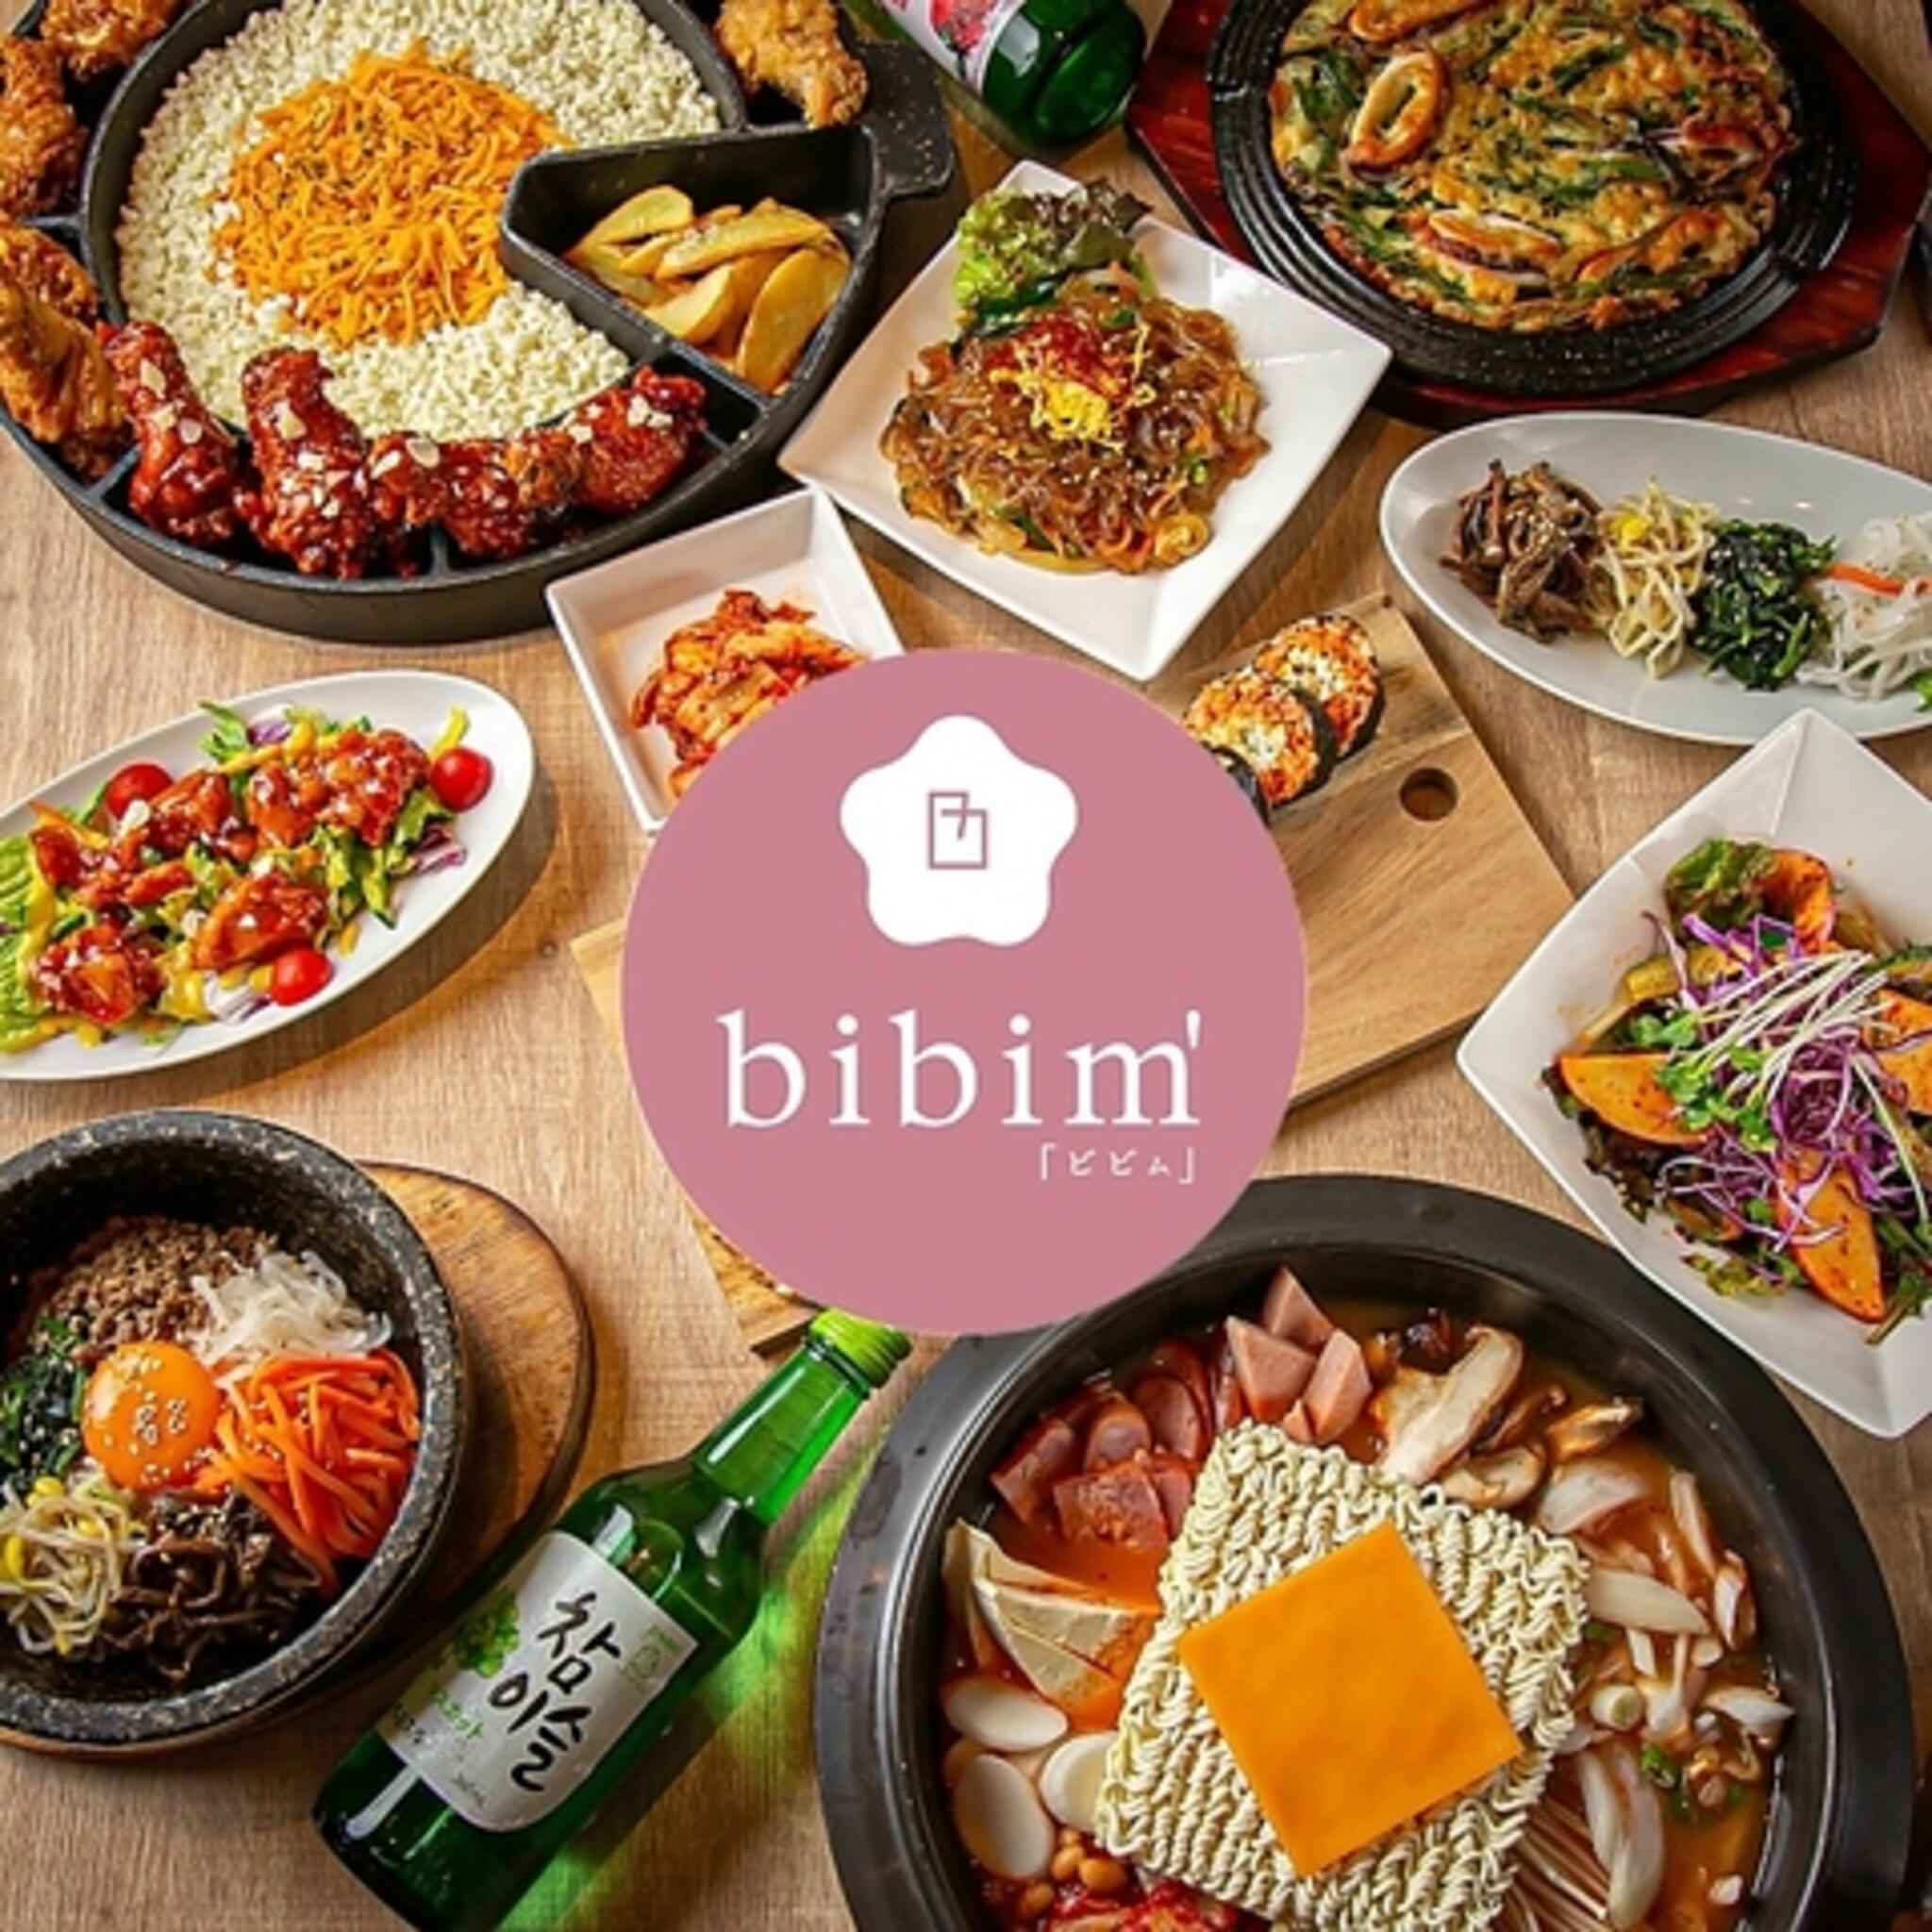 bibim 韓国石鍋bibim' あべのキューズモール店の代表写真3